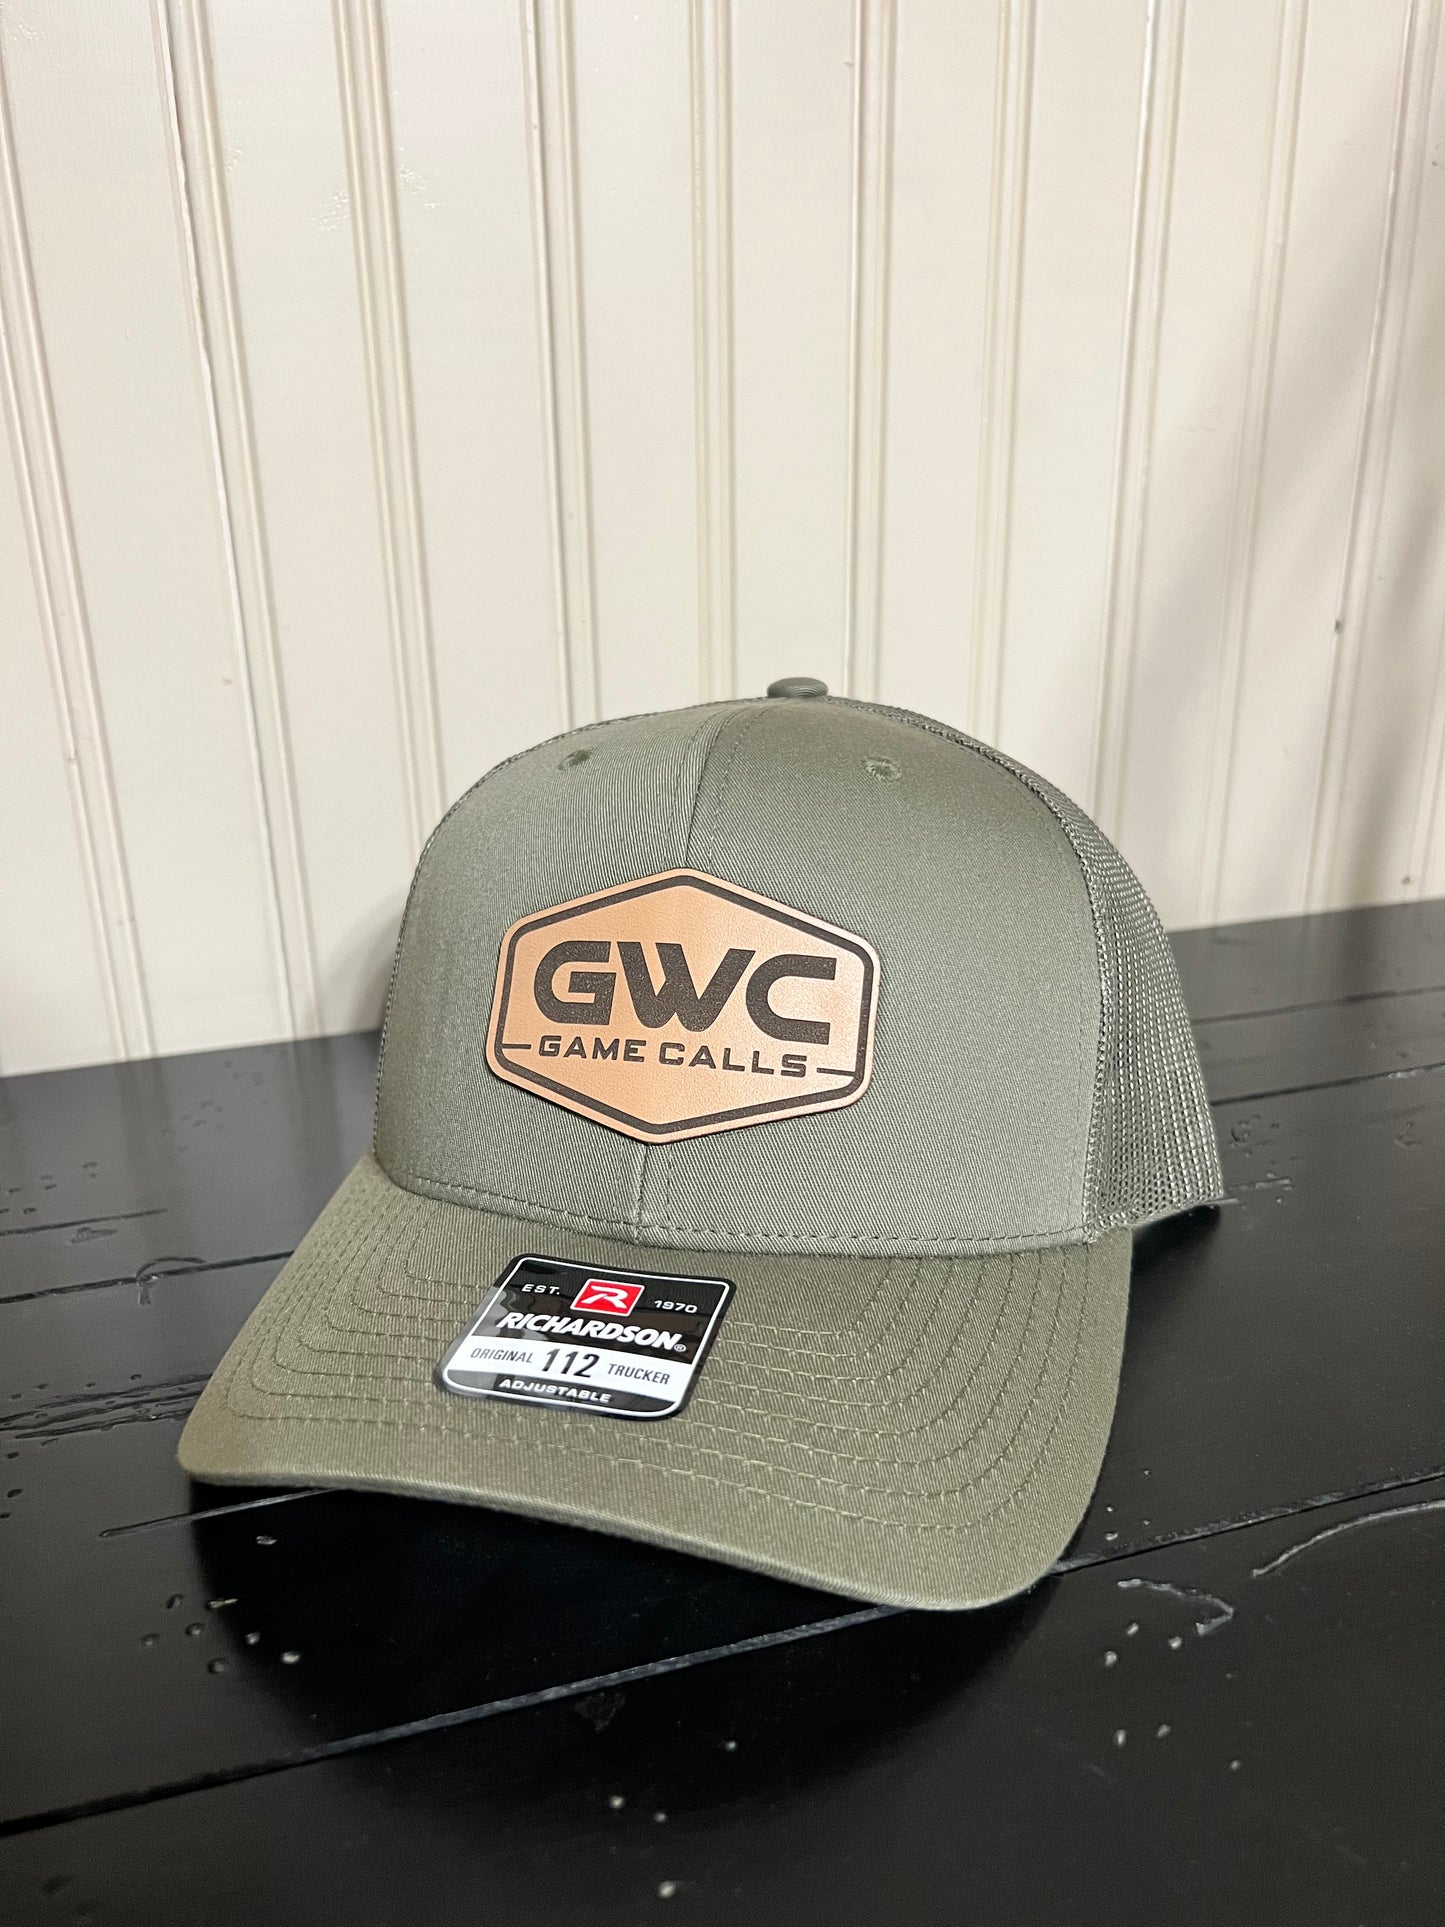 GWC patch hat